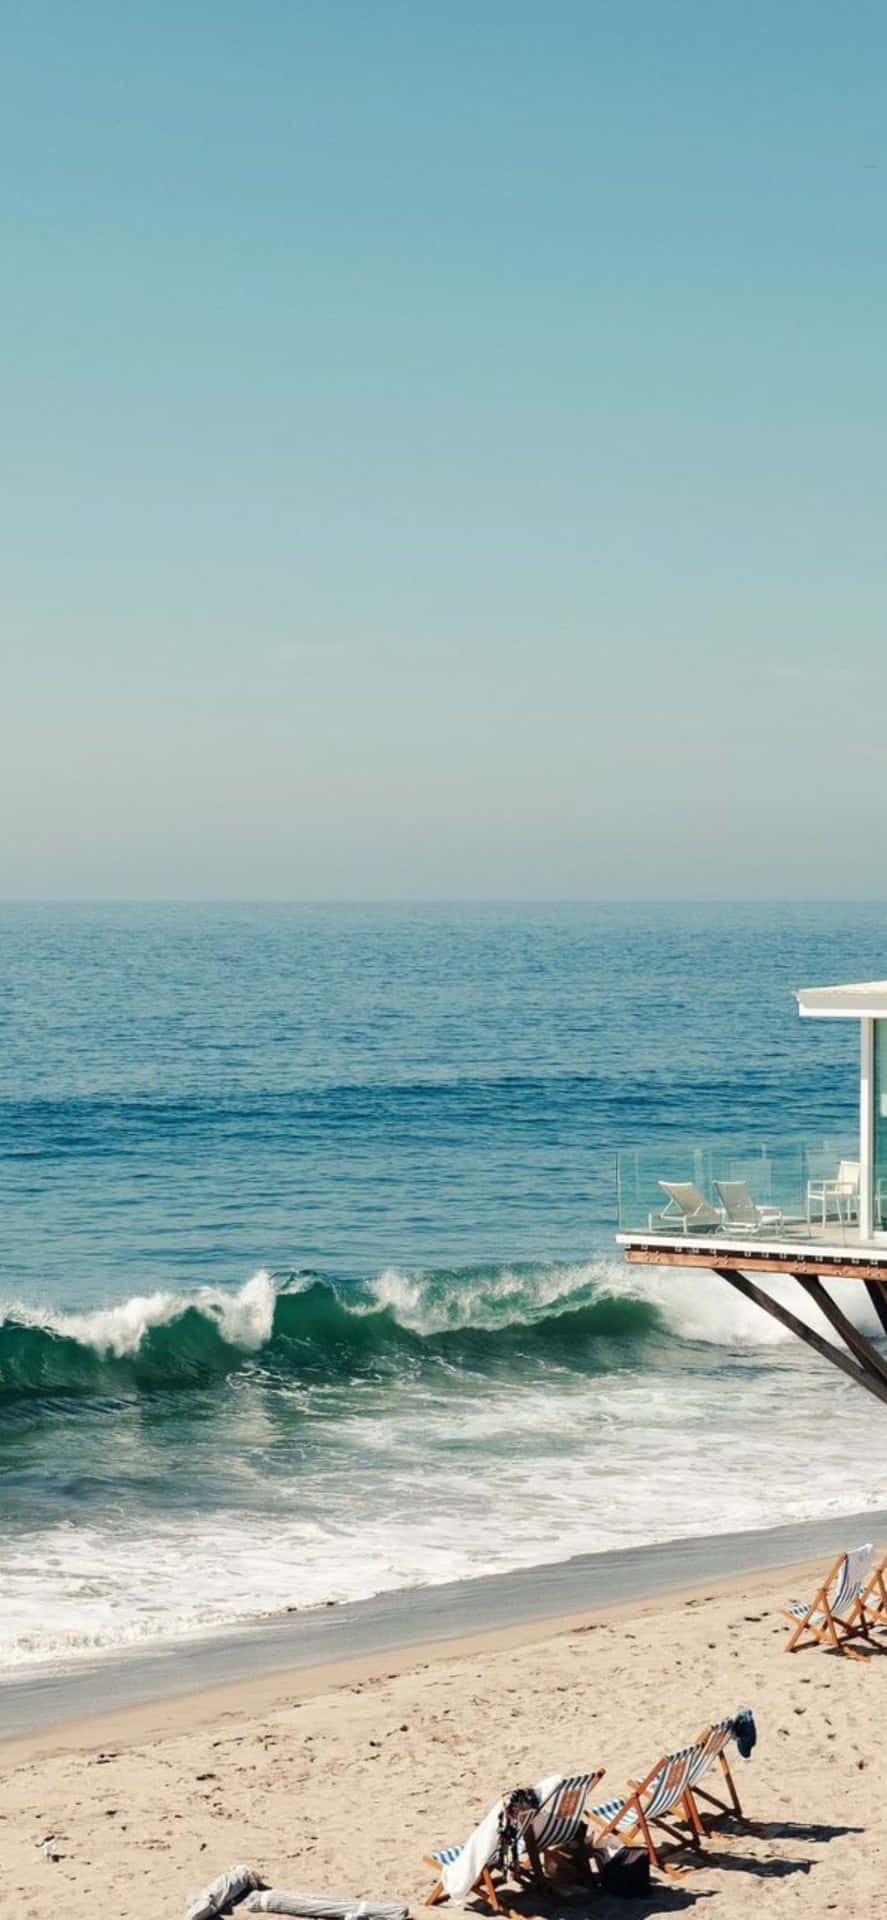 Iphone Xs Max Malibu Background Crashing Waves By A Beach House